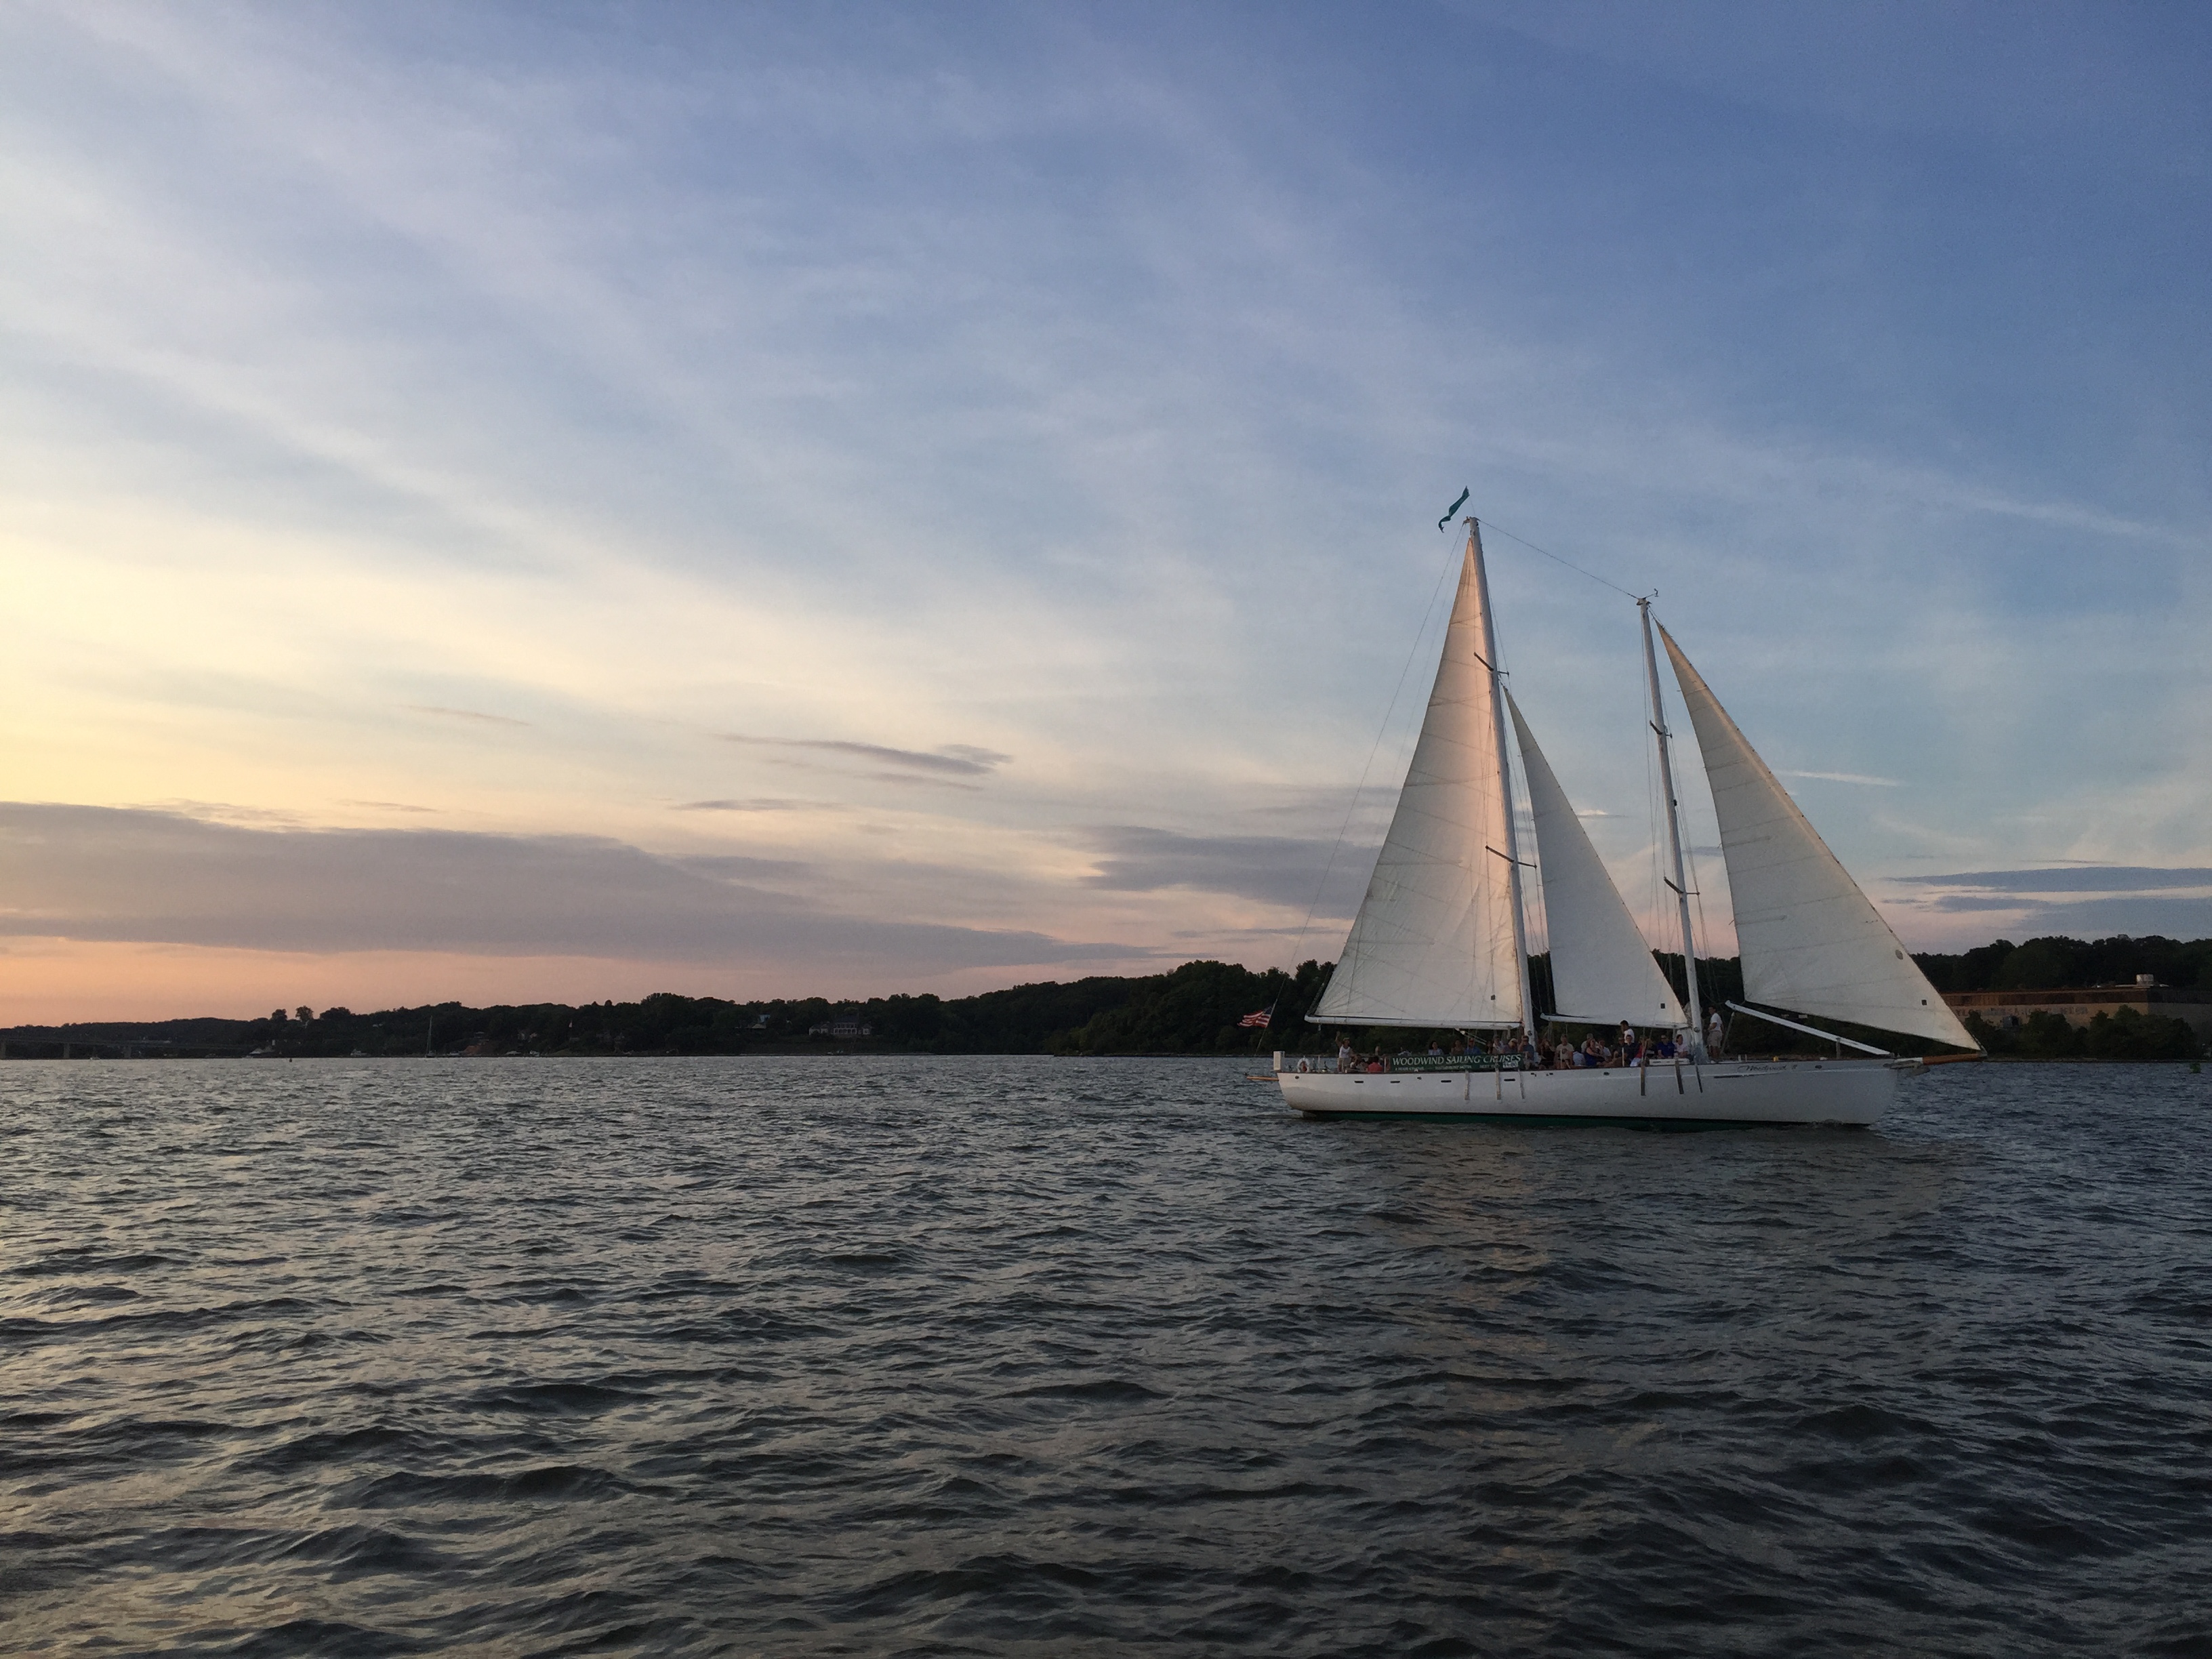 Schooner sailing on a quiet night at dusk along the shoreline